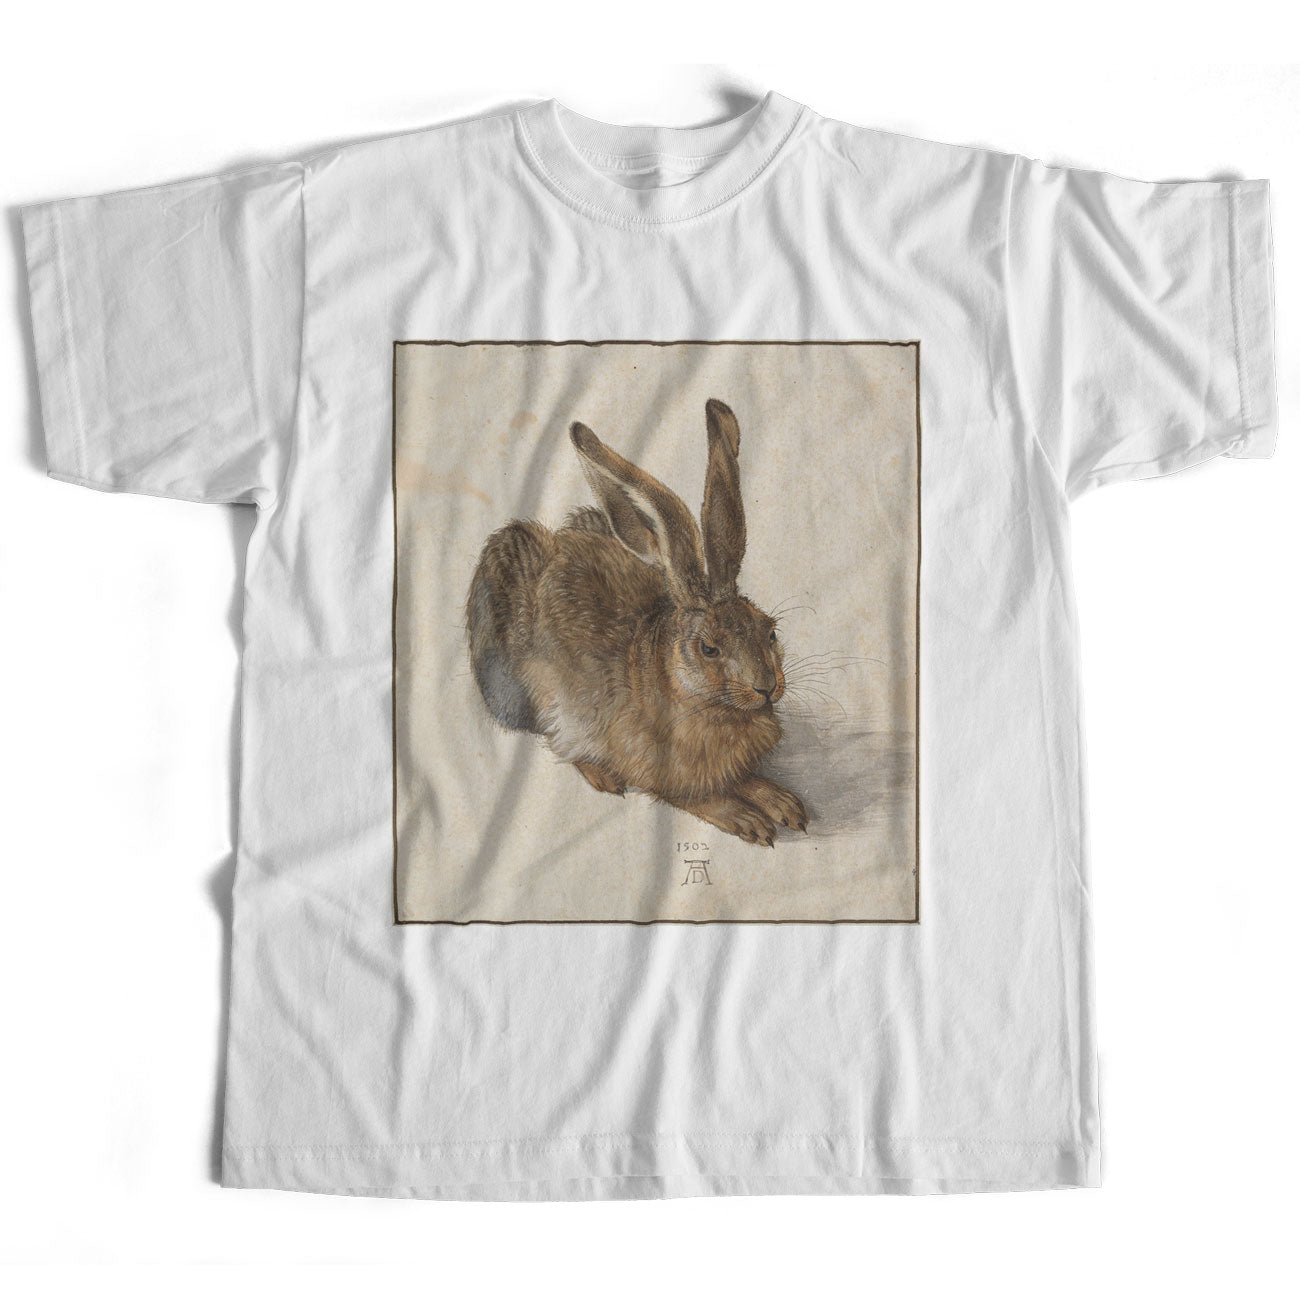 Albrecht Durer T Shirt - Rabbit Print Classic Colour Fine Art Illustration